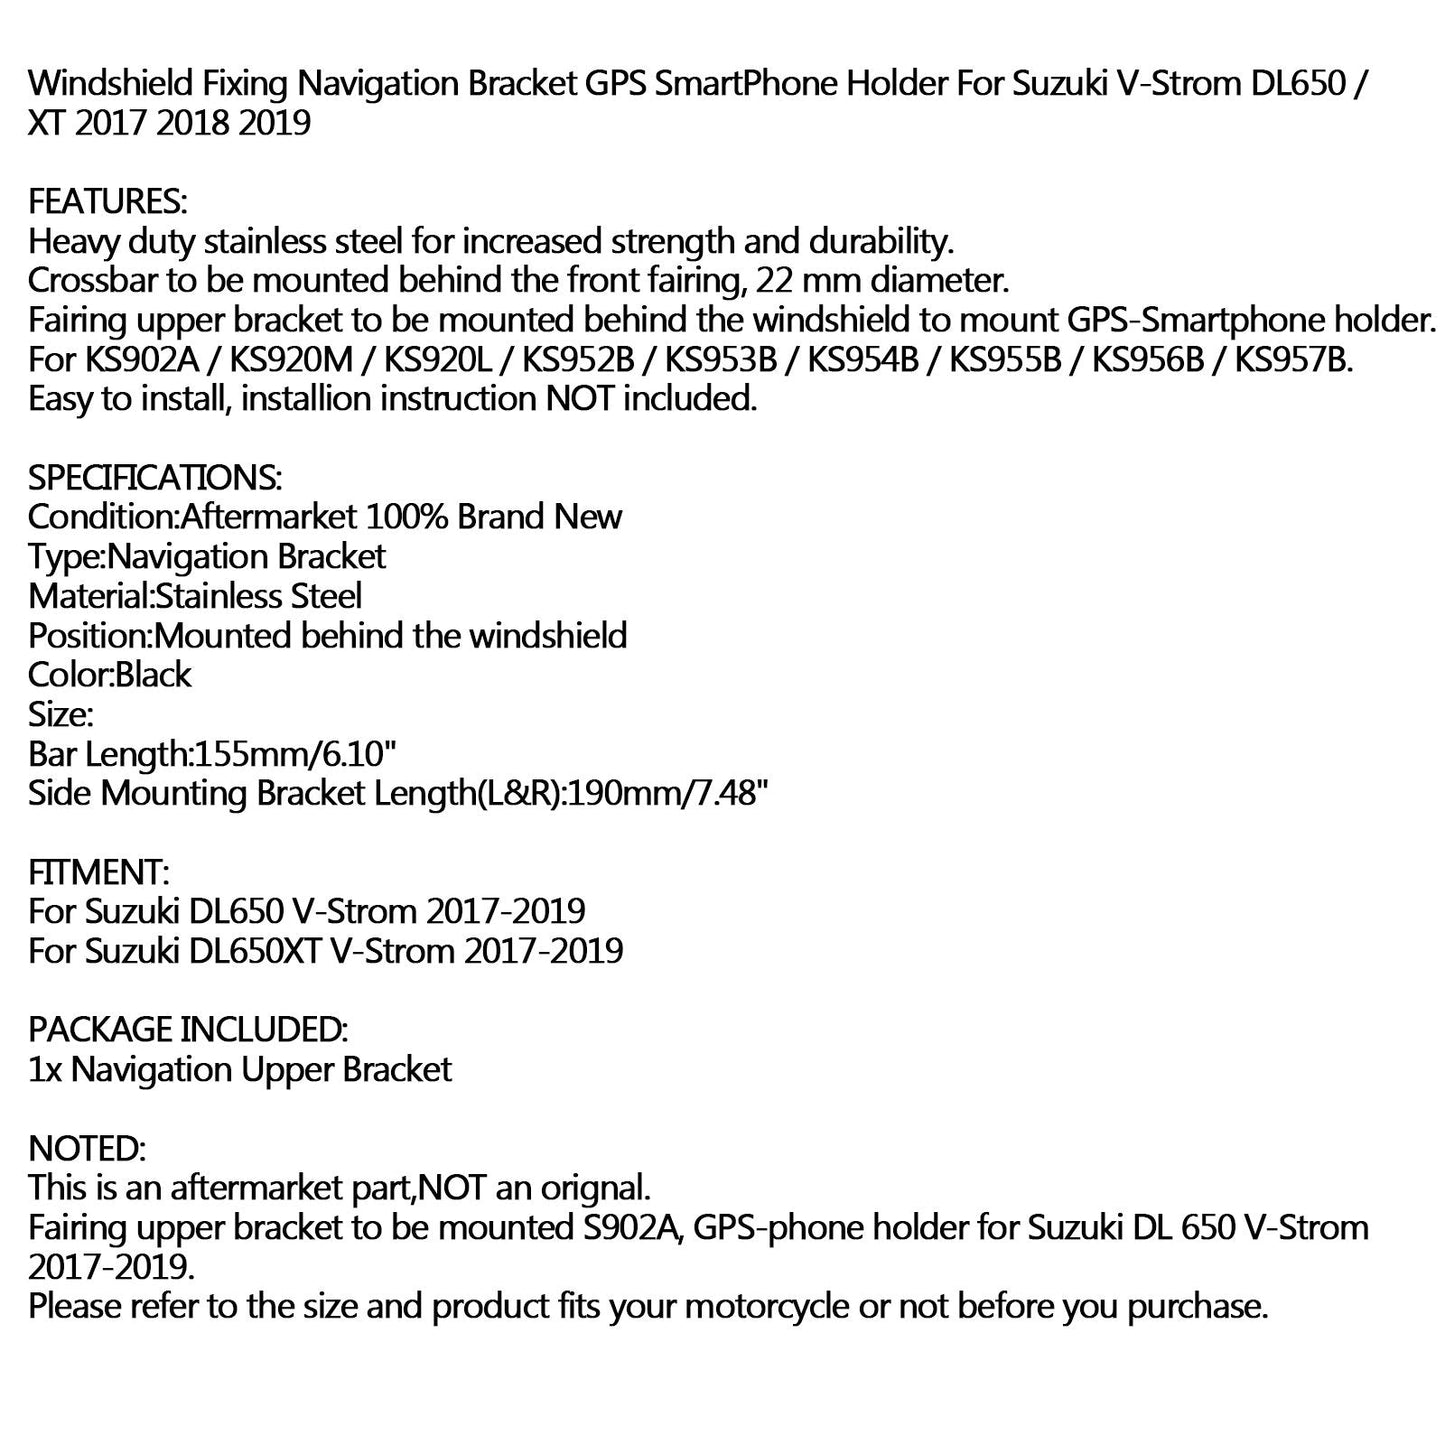 GPS/SMARTPHONE Navigation Bracket Holder Fit for Suzuki DL650 XT V-Strom 17-19